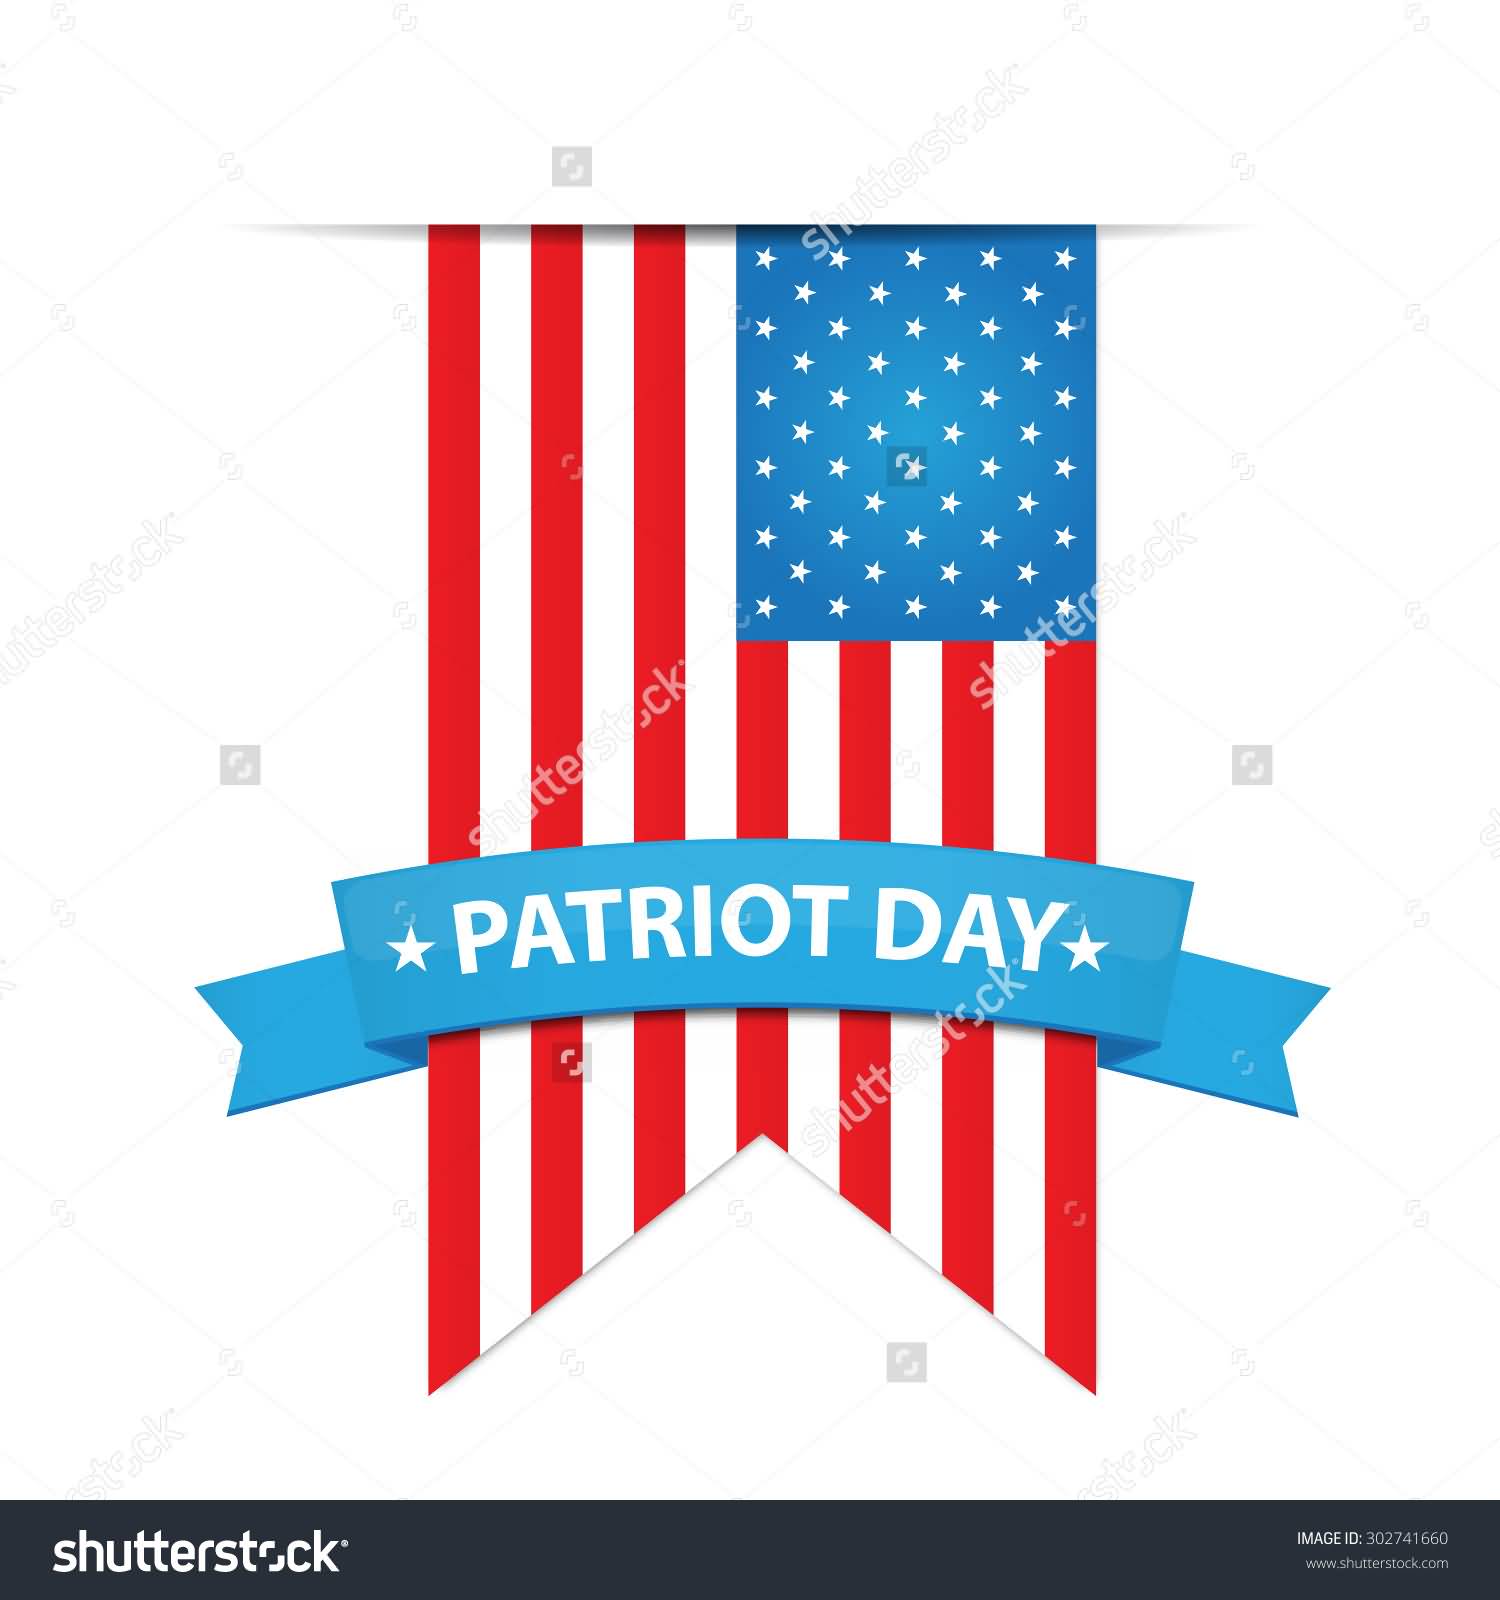 Patriot Day Banner Illustration